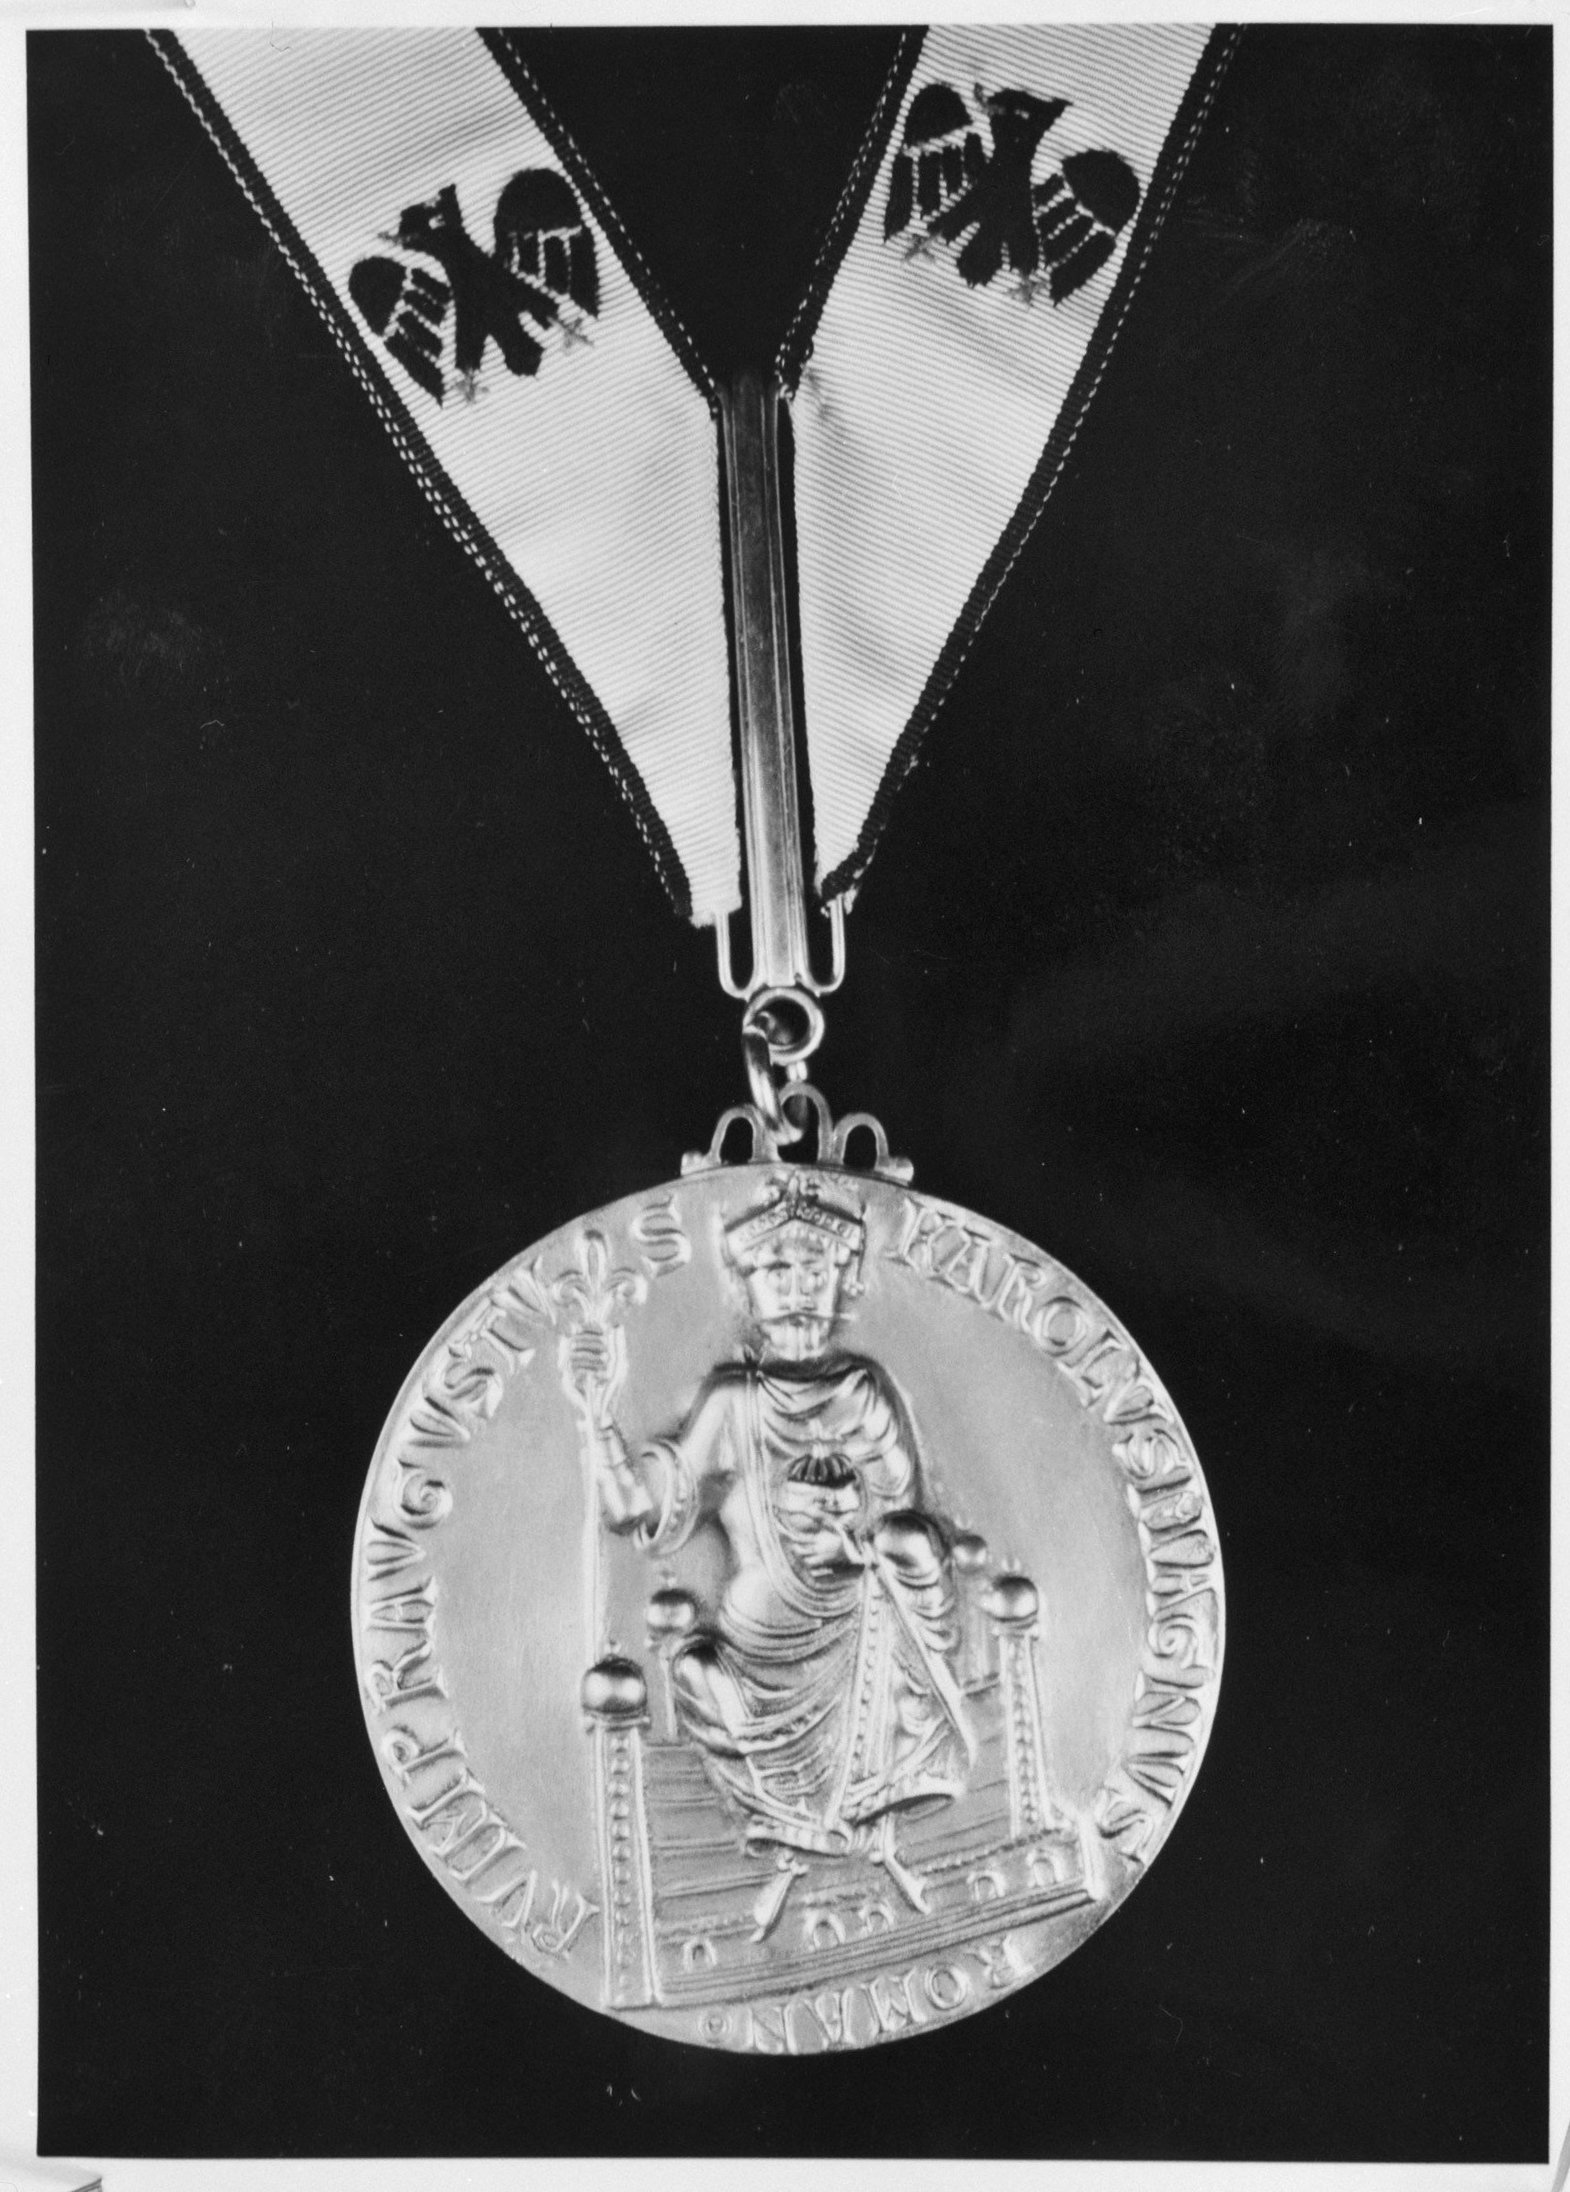 File:Karel Grote prijs voor Luns , de medaille, Bestanddeelnr 920-2550.jpg - Wikimedia Commons